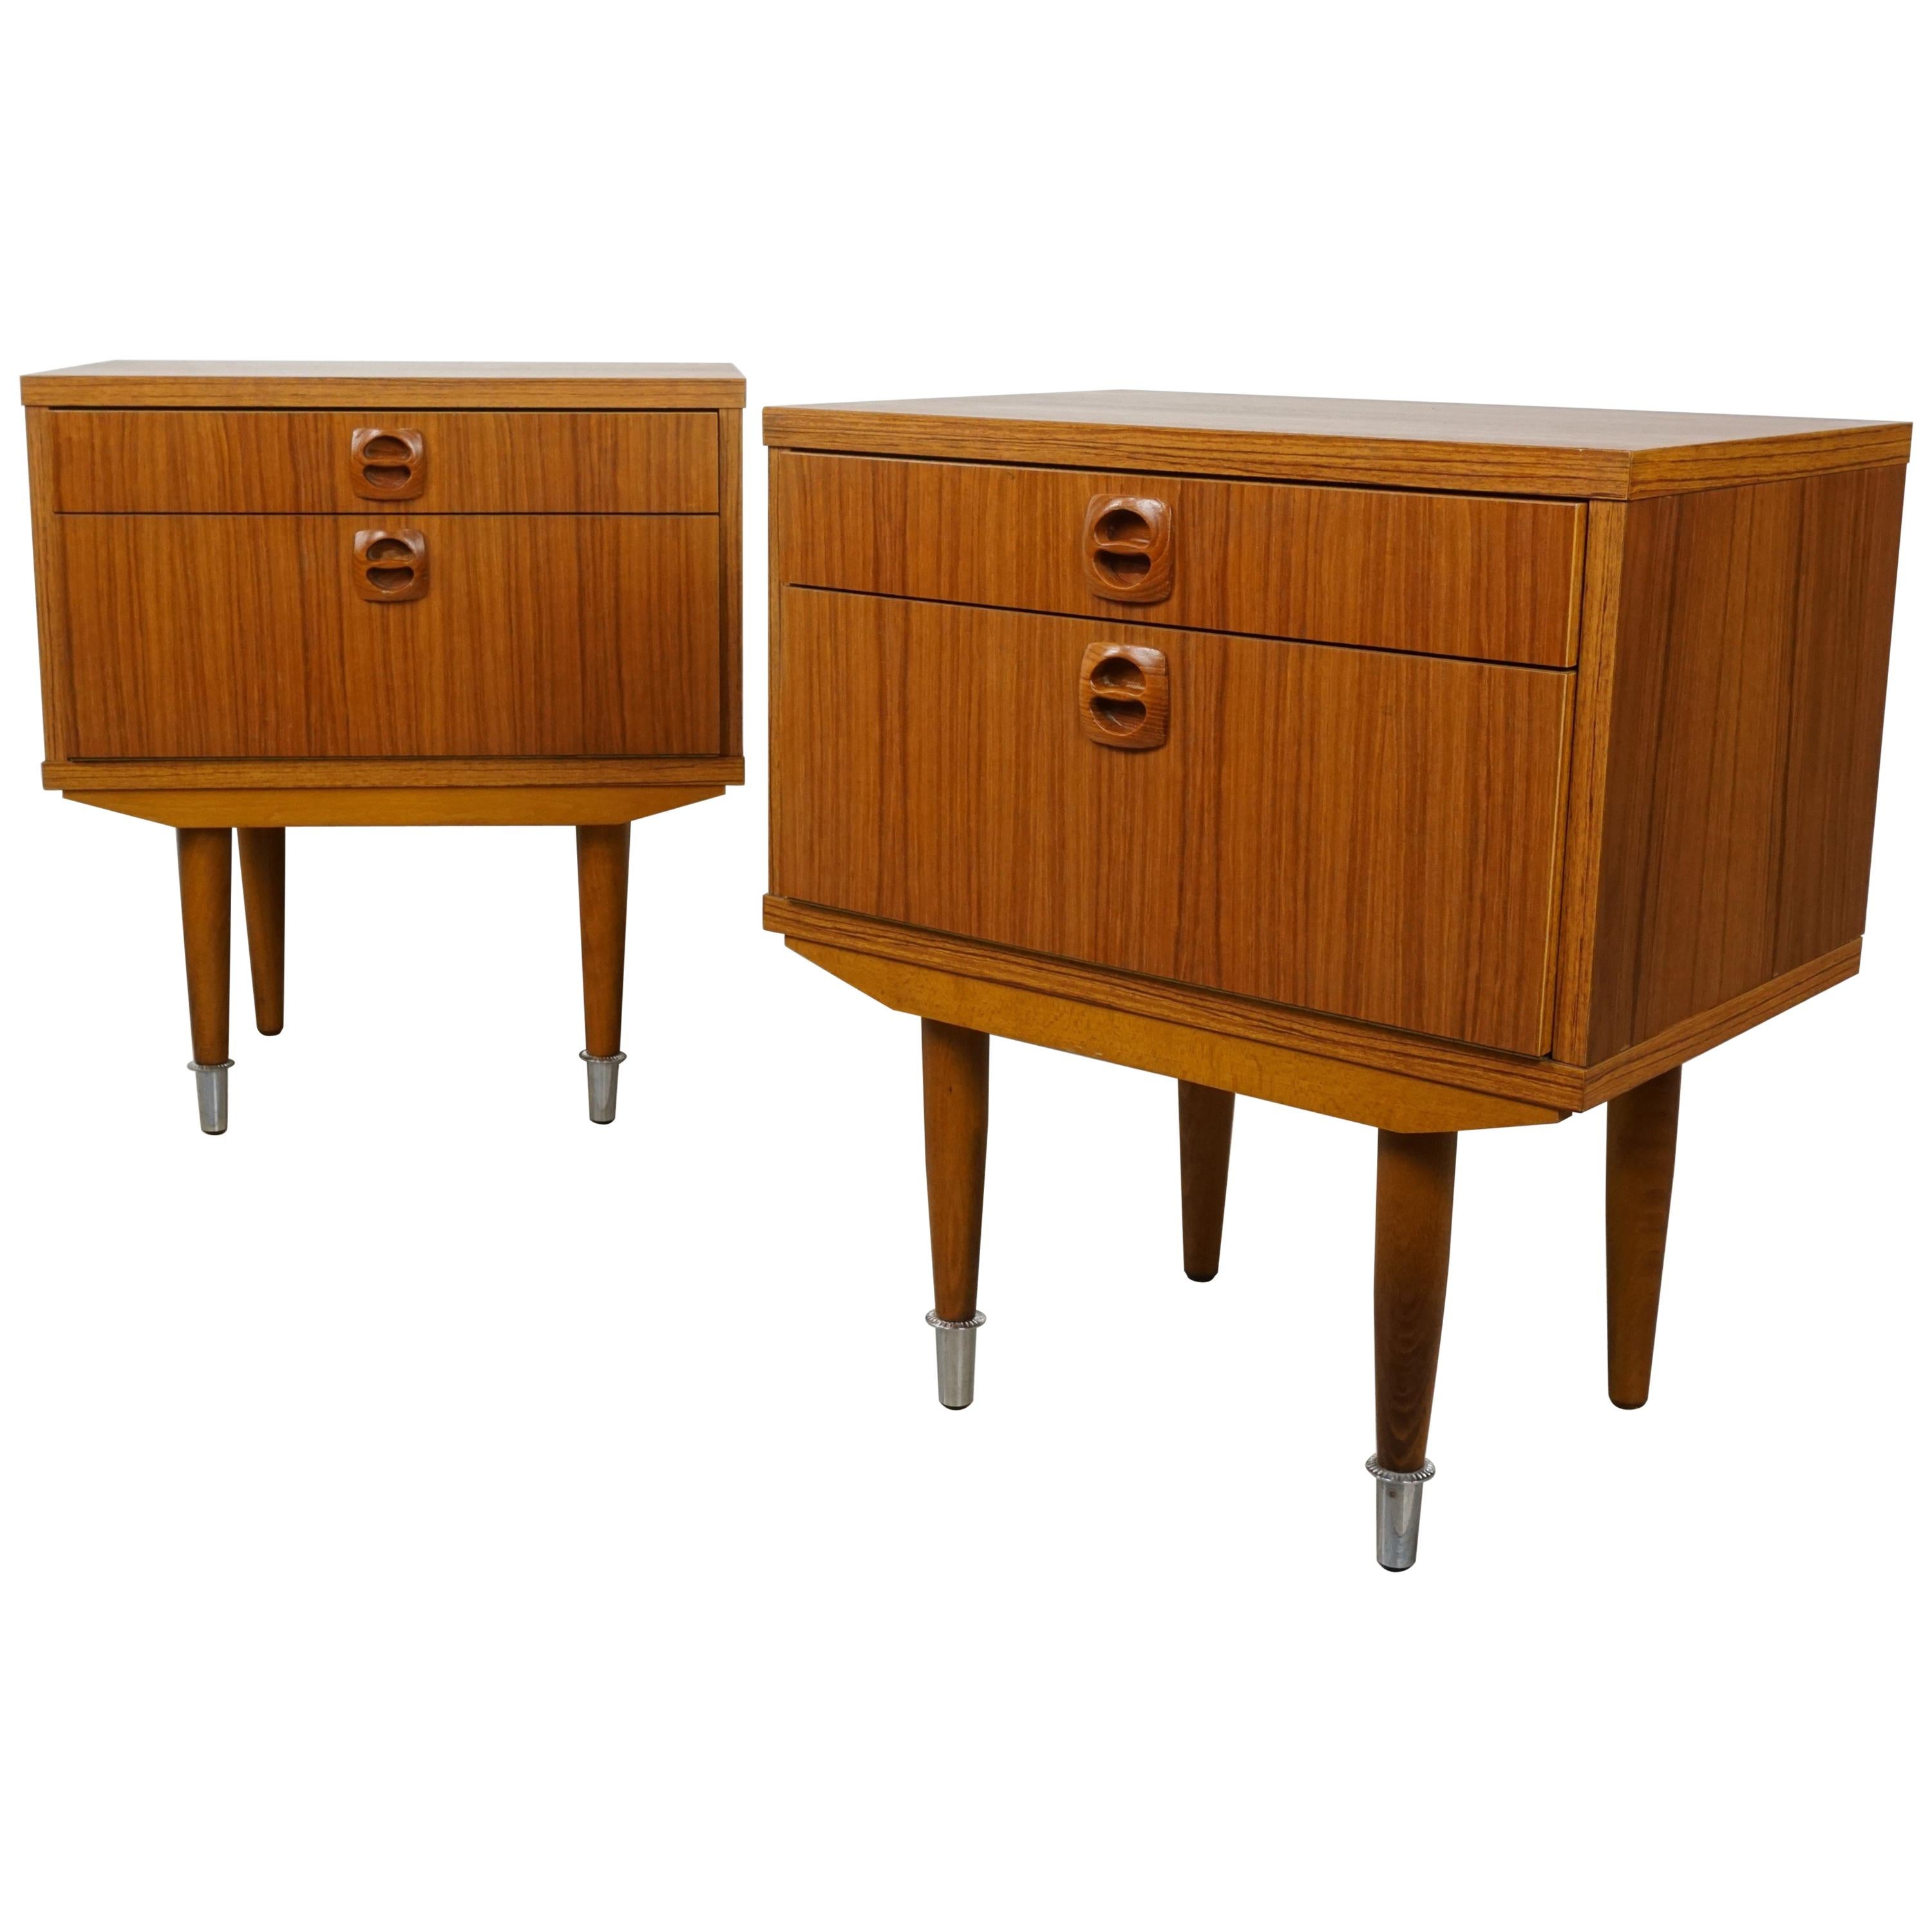 Pair of 1960s Teak Wooden Bedside Tables